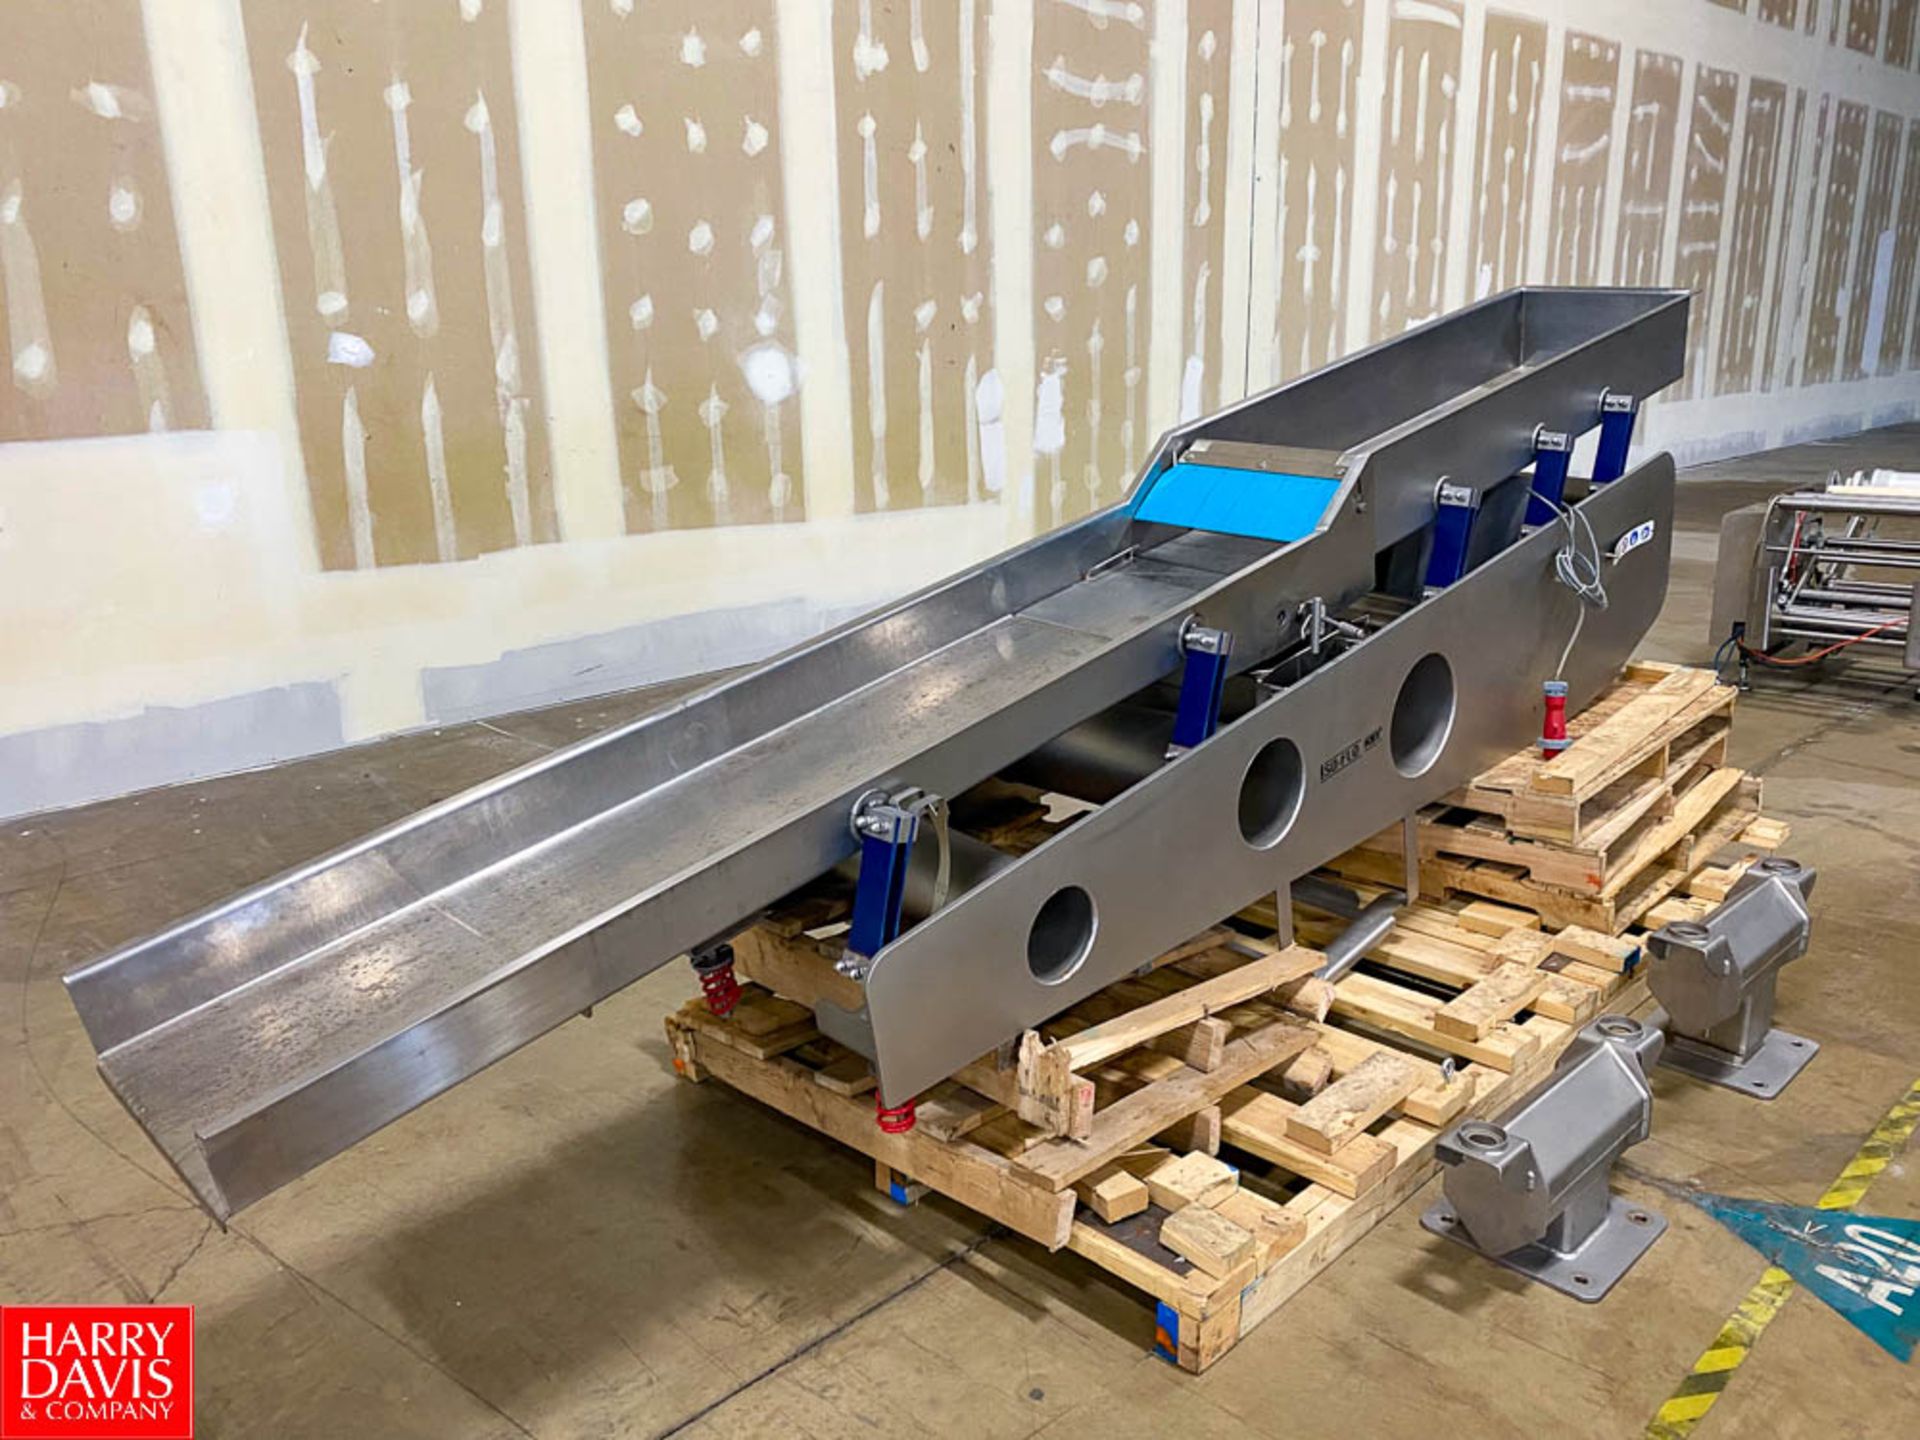 Key Iso-Flo S/S Vibratory Conveyor, 13' Length x 18" Width Pan - Riggers Fee: $800 - Image 2 of 2